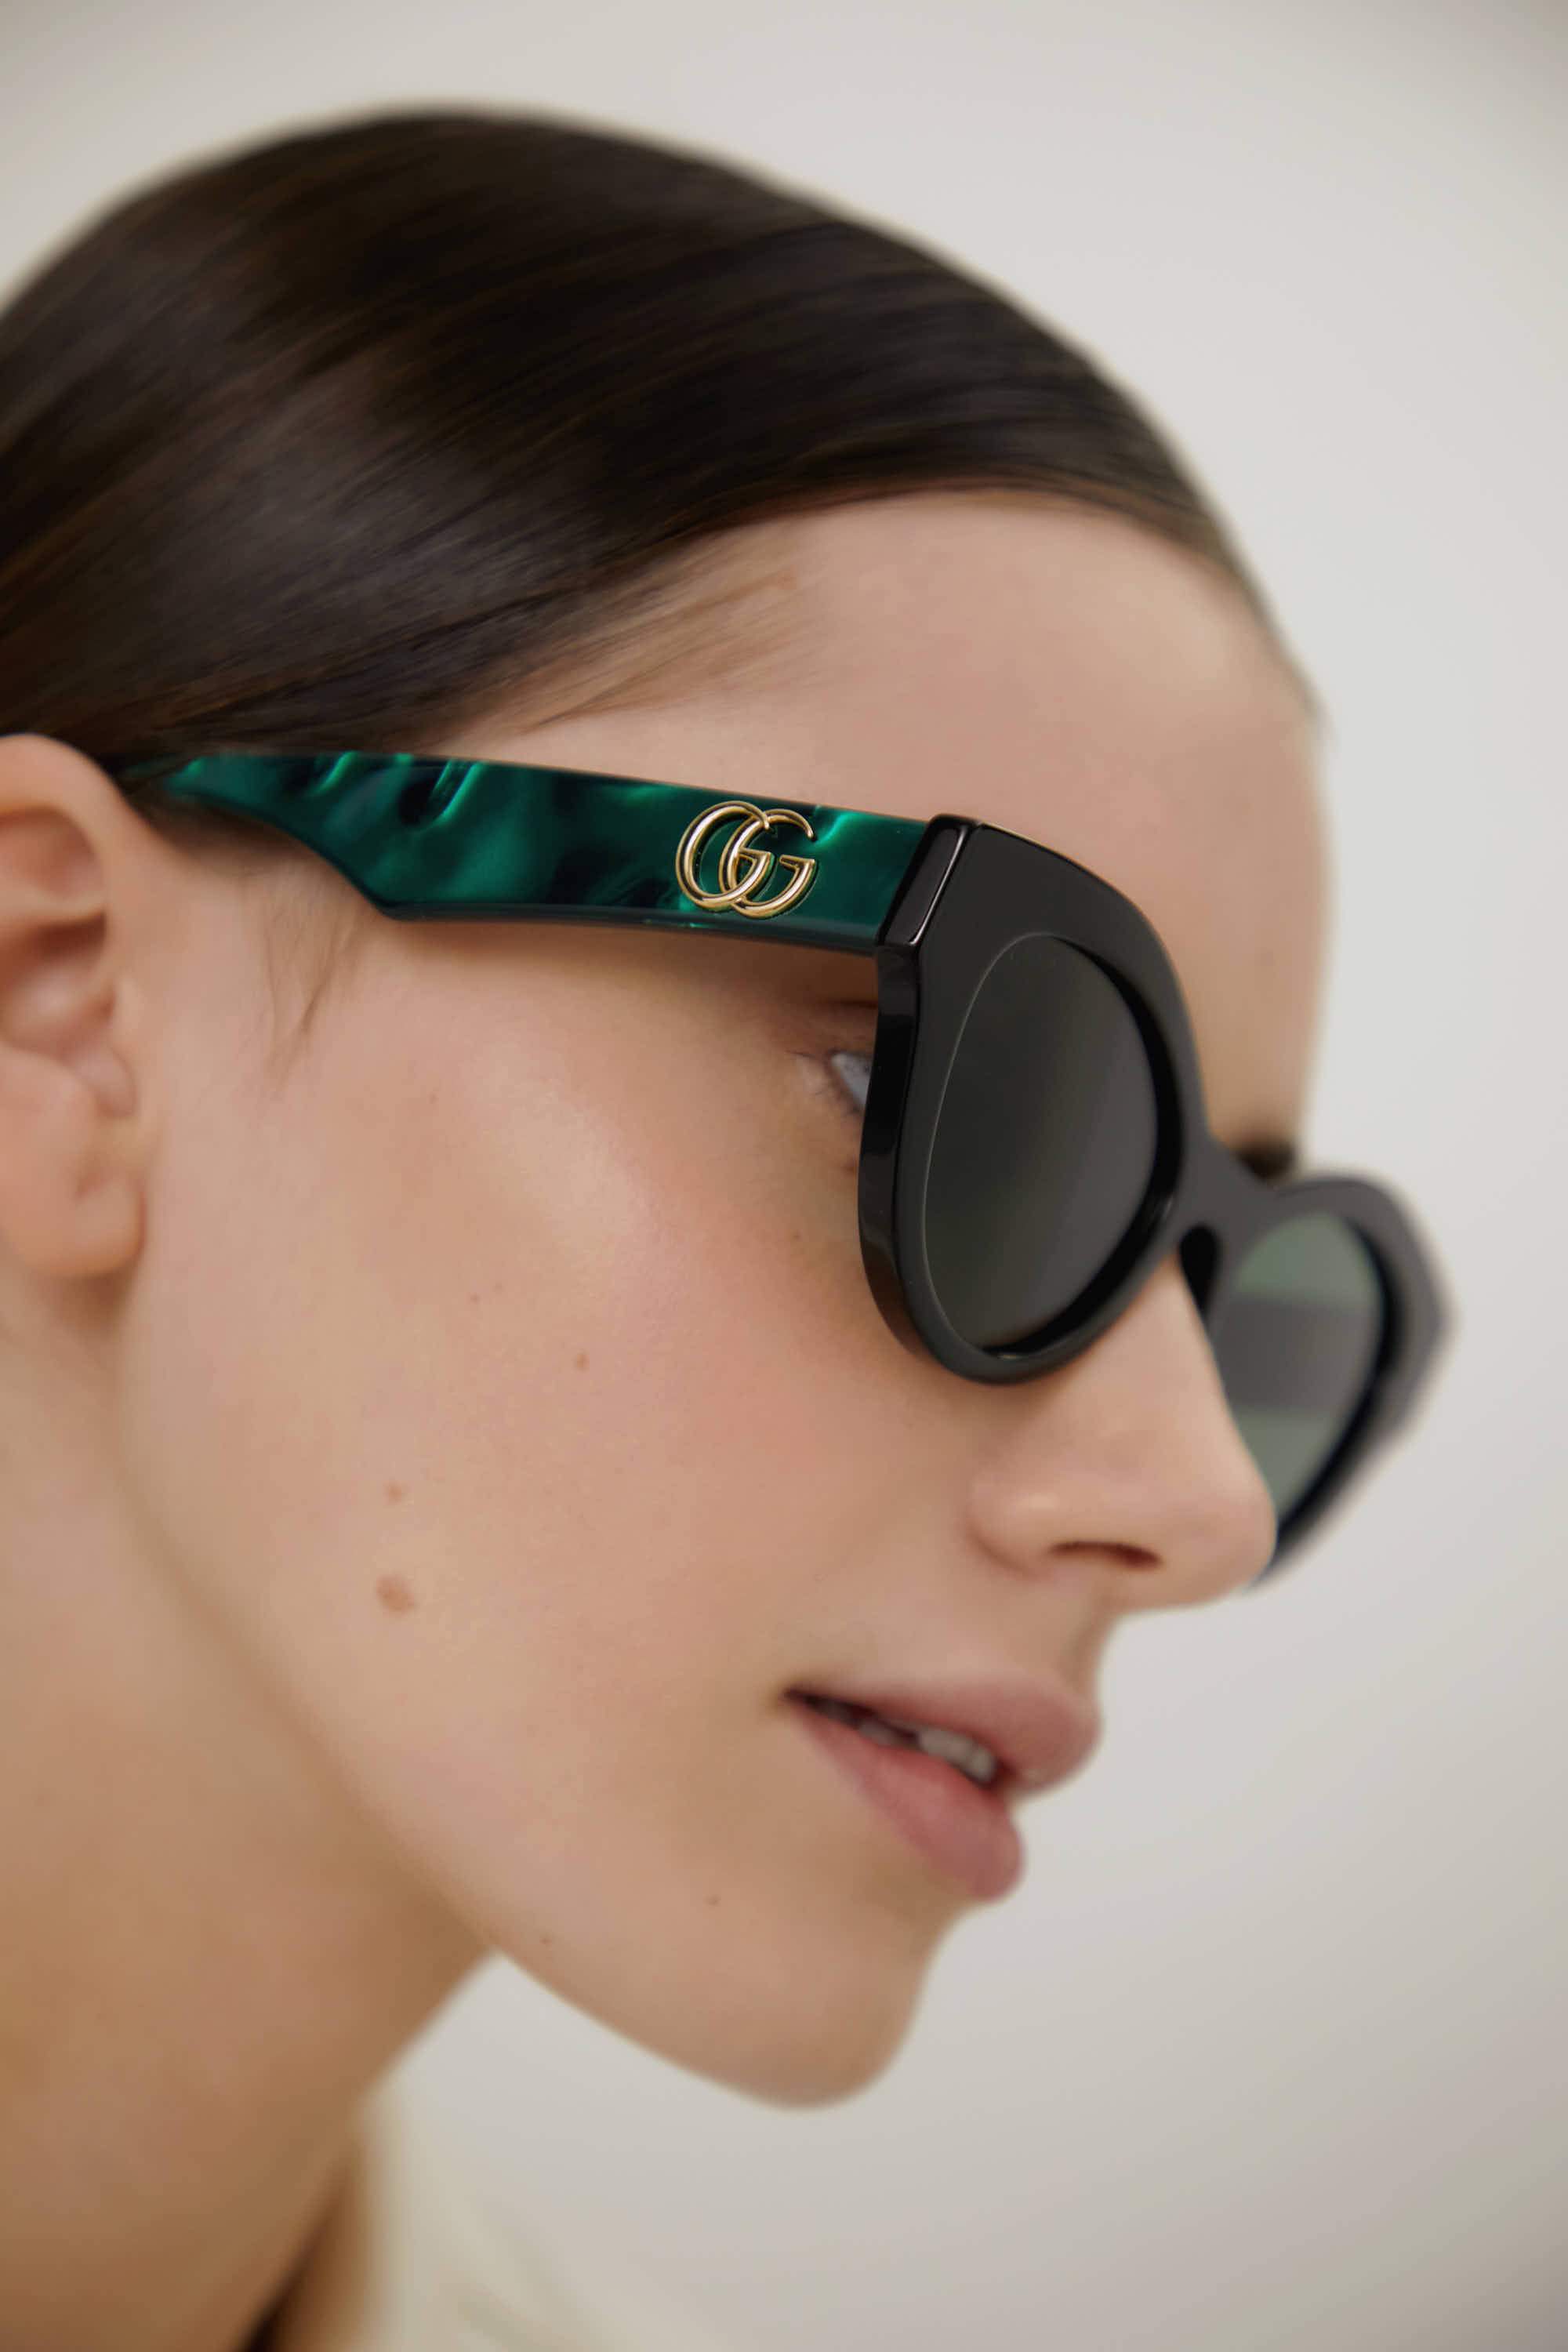 Gucci cat eye black and green sunglasses - Eyewear Club